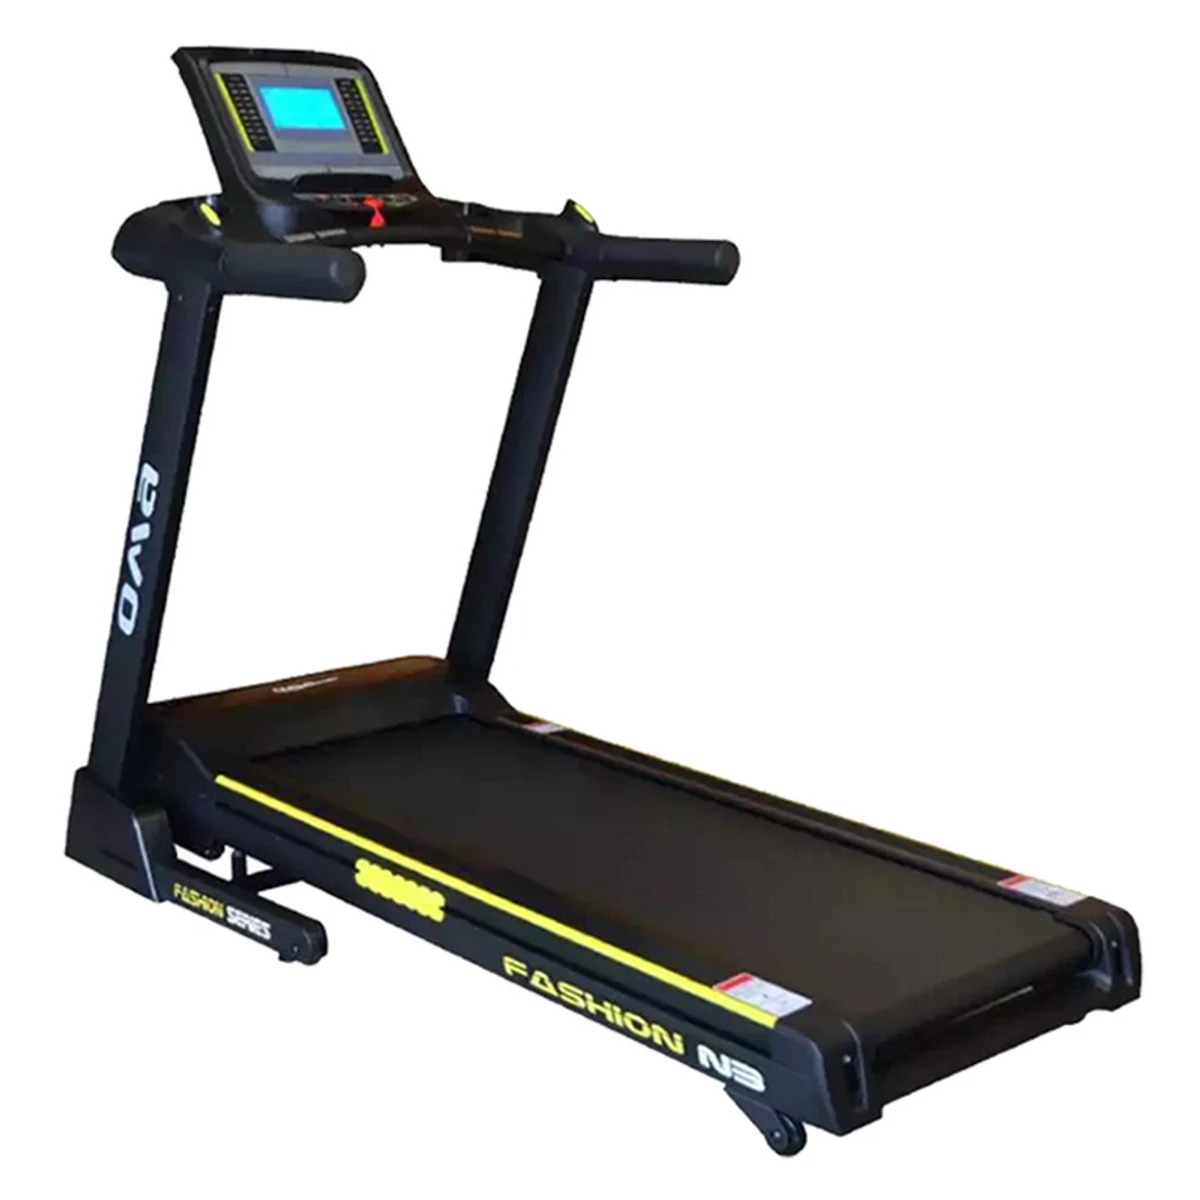 Oma-5332CAI (4.0 HP Peak) Motorized Treadmill